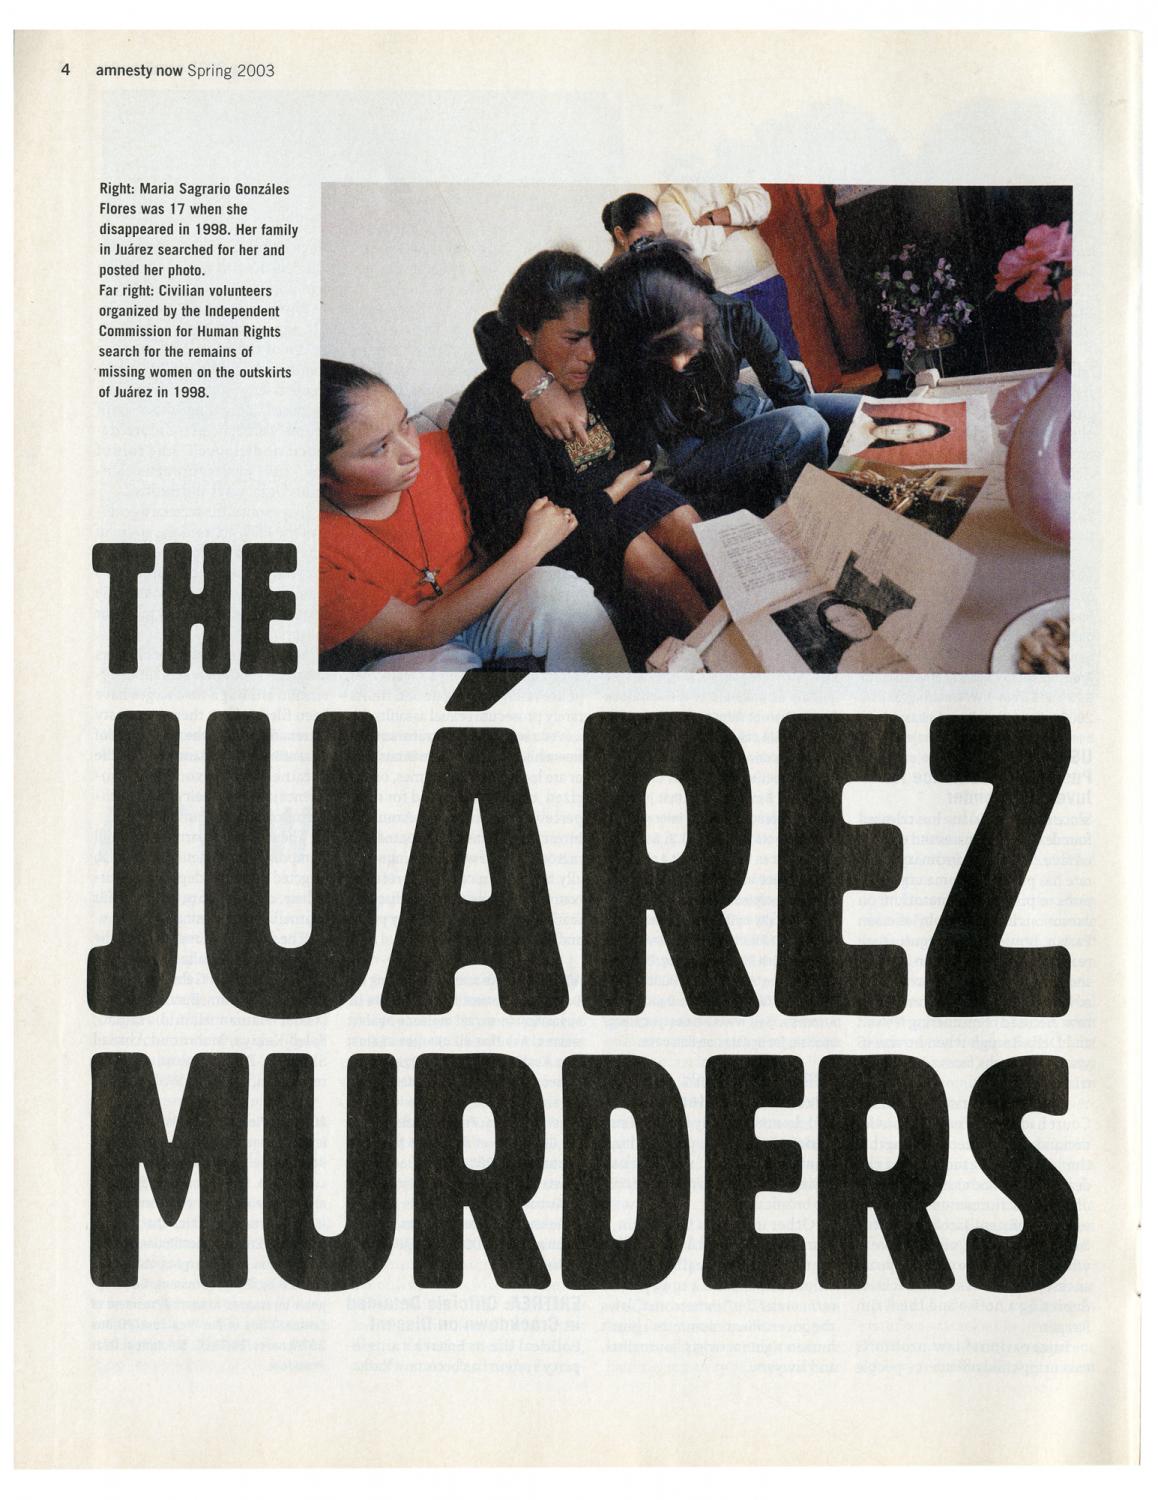 Missing Women of Juarez (1998) - Amnesty Now, Spring 2003.